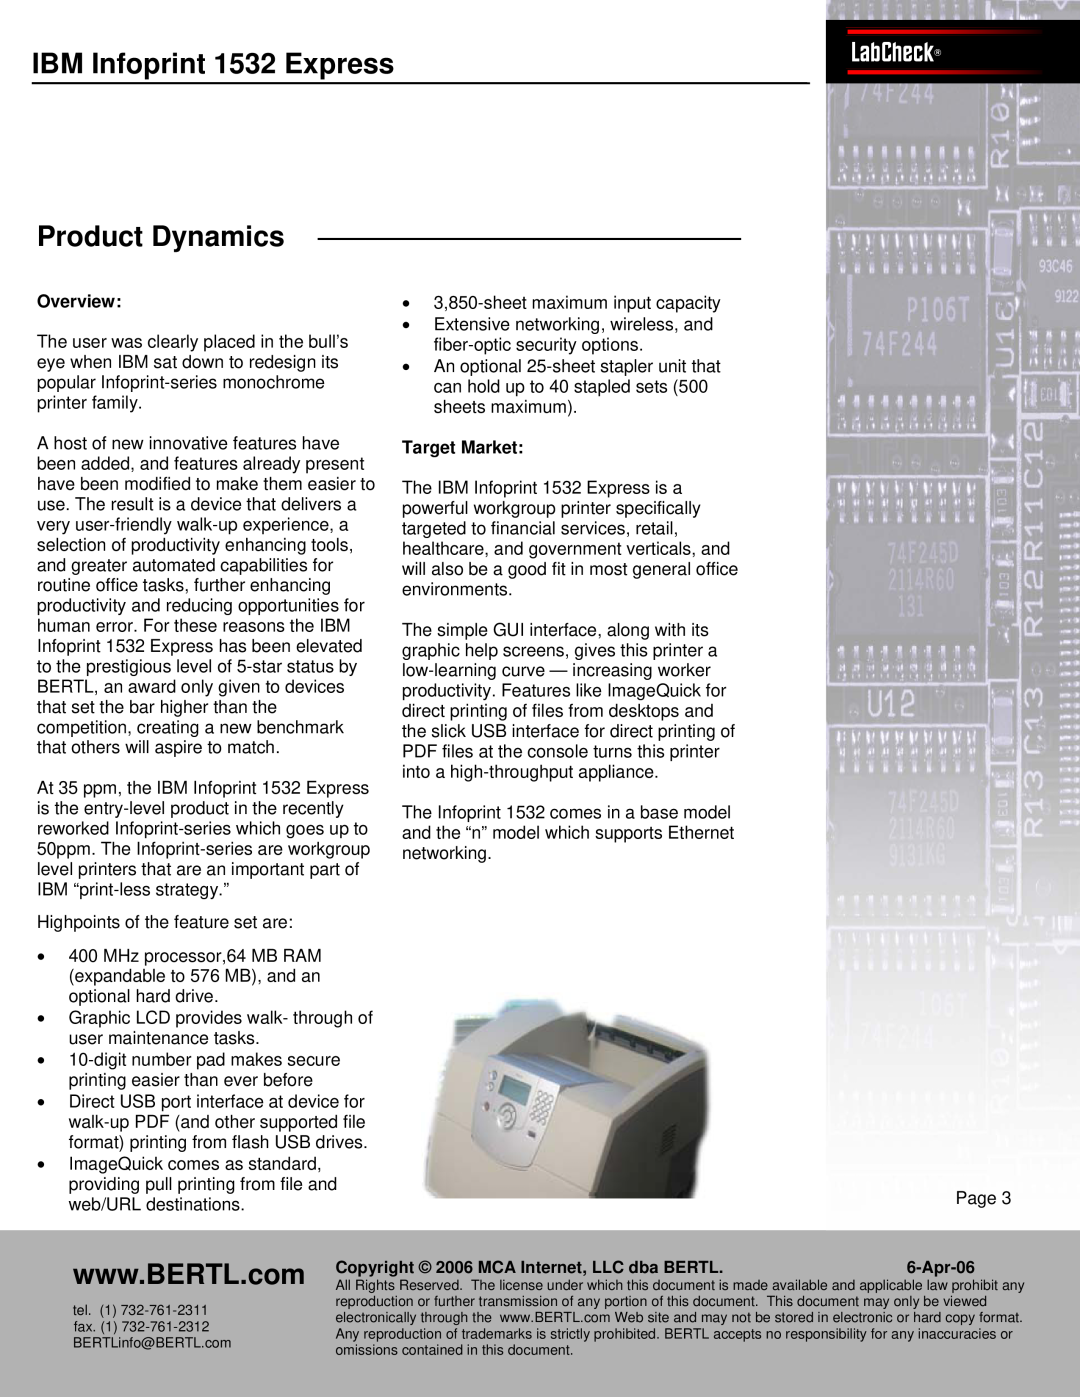 IBM Bertl IBMPanasInfonicprintWORKiO1532 ExpressDP-6530LabCheck, Product Dynamics, Overview, Target Market, Page, Apr-06 